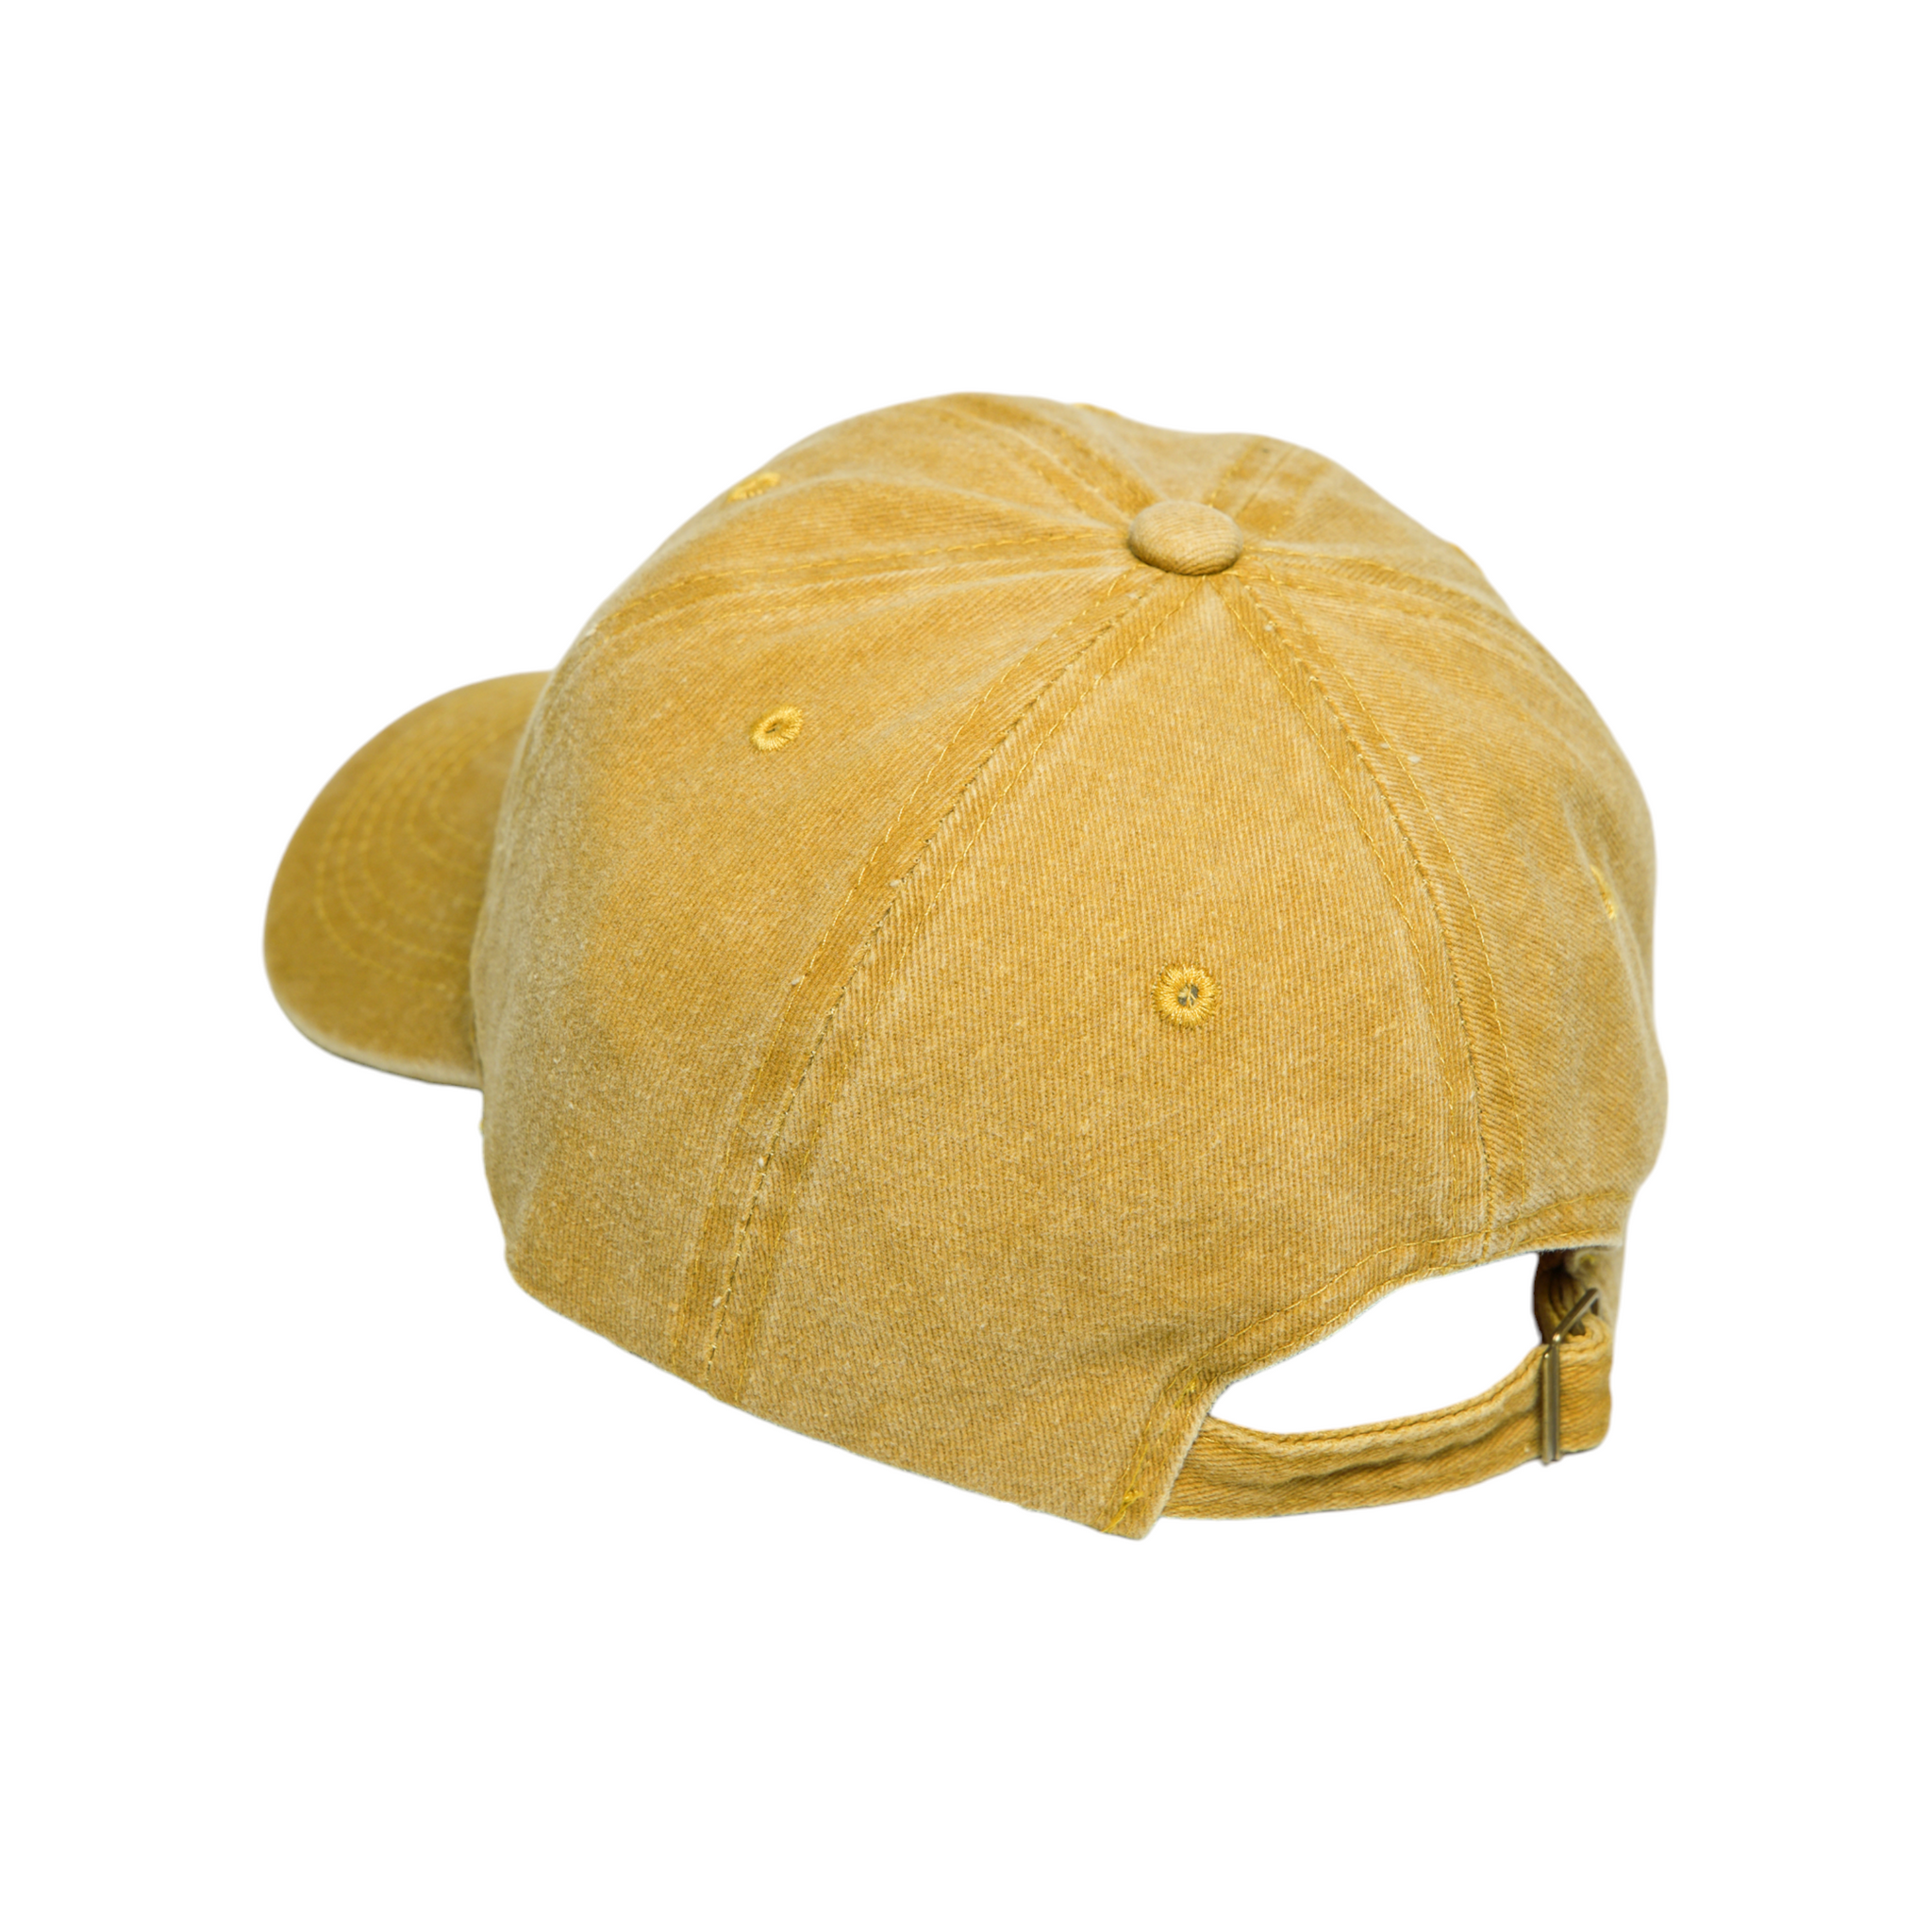 Chokore Blank Washed Baseball Cap (Yellow)